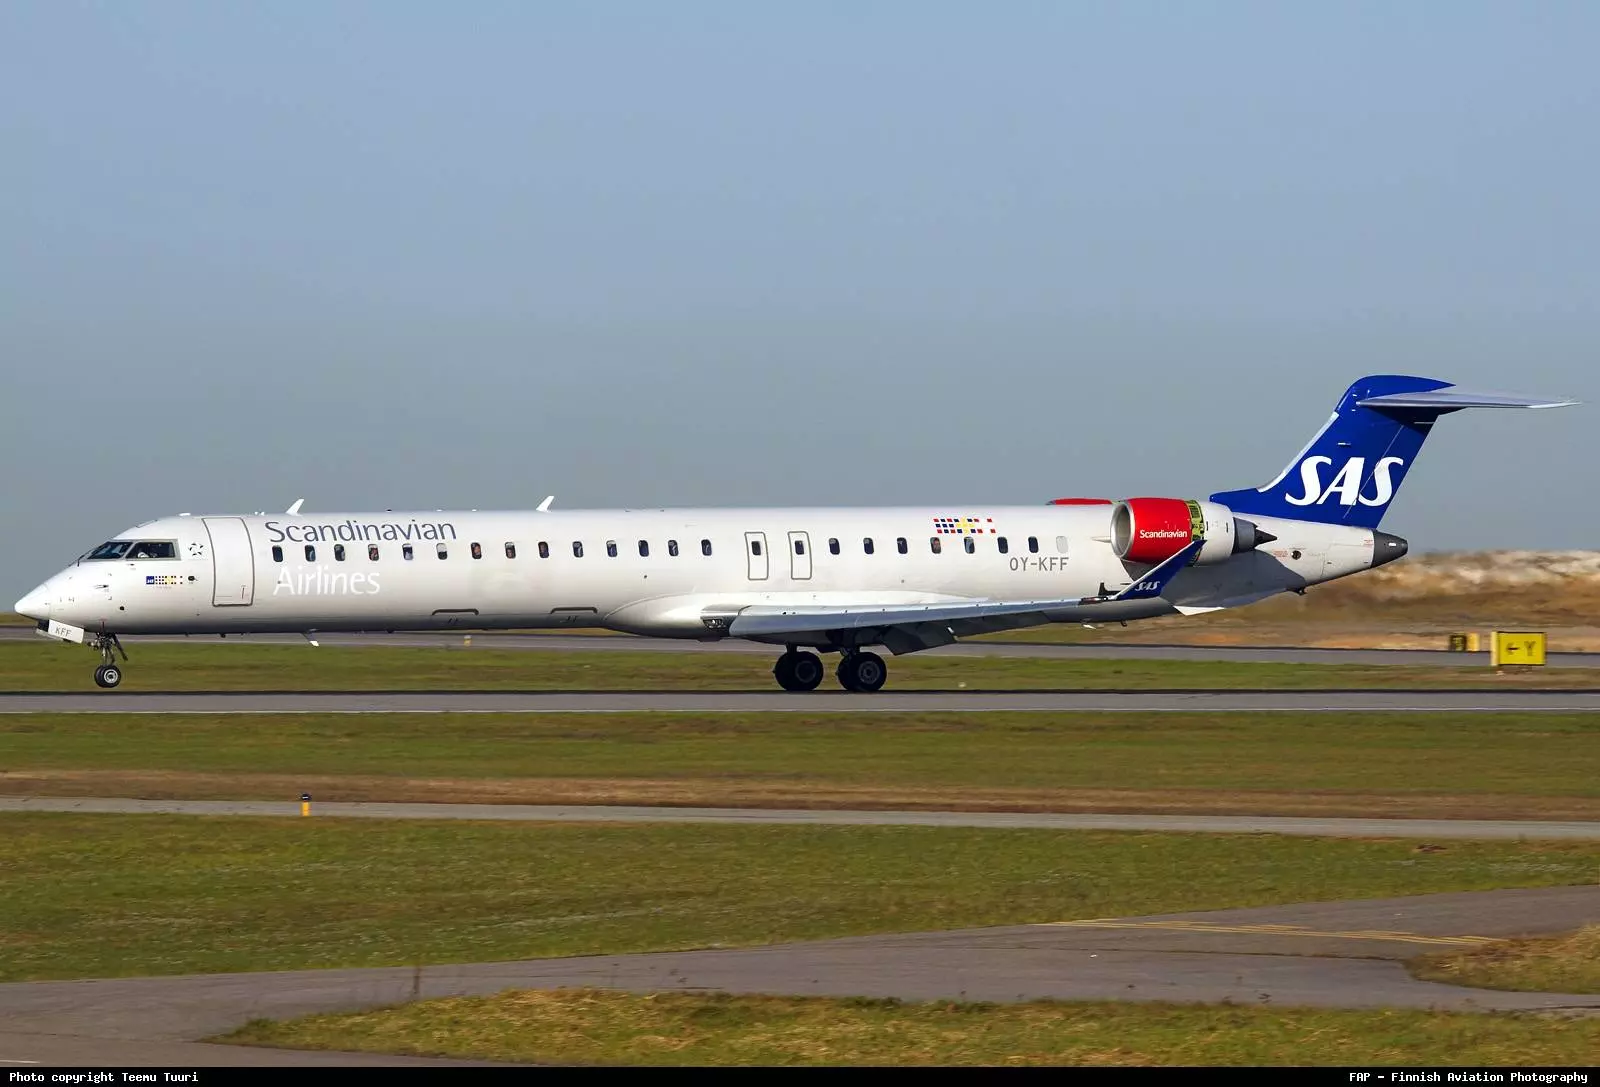 Скандинавские авиалинии - scandinavian airlines - dev.abcdef.wiki